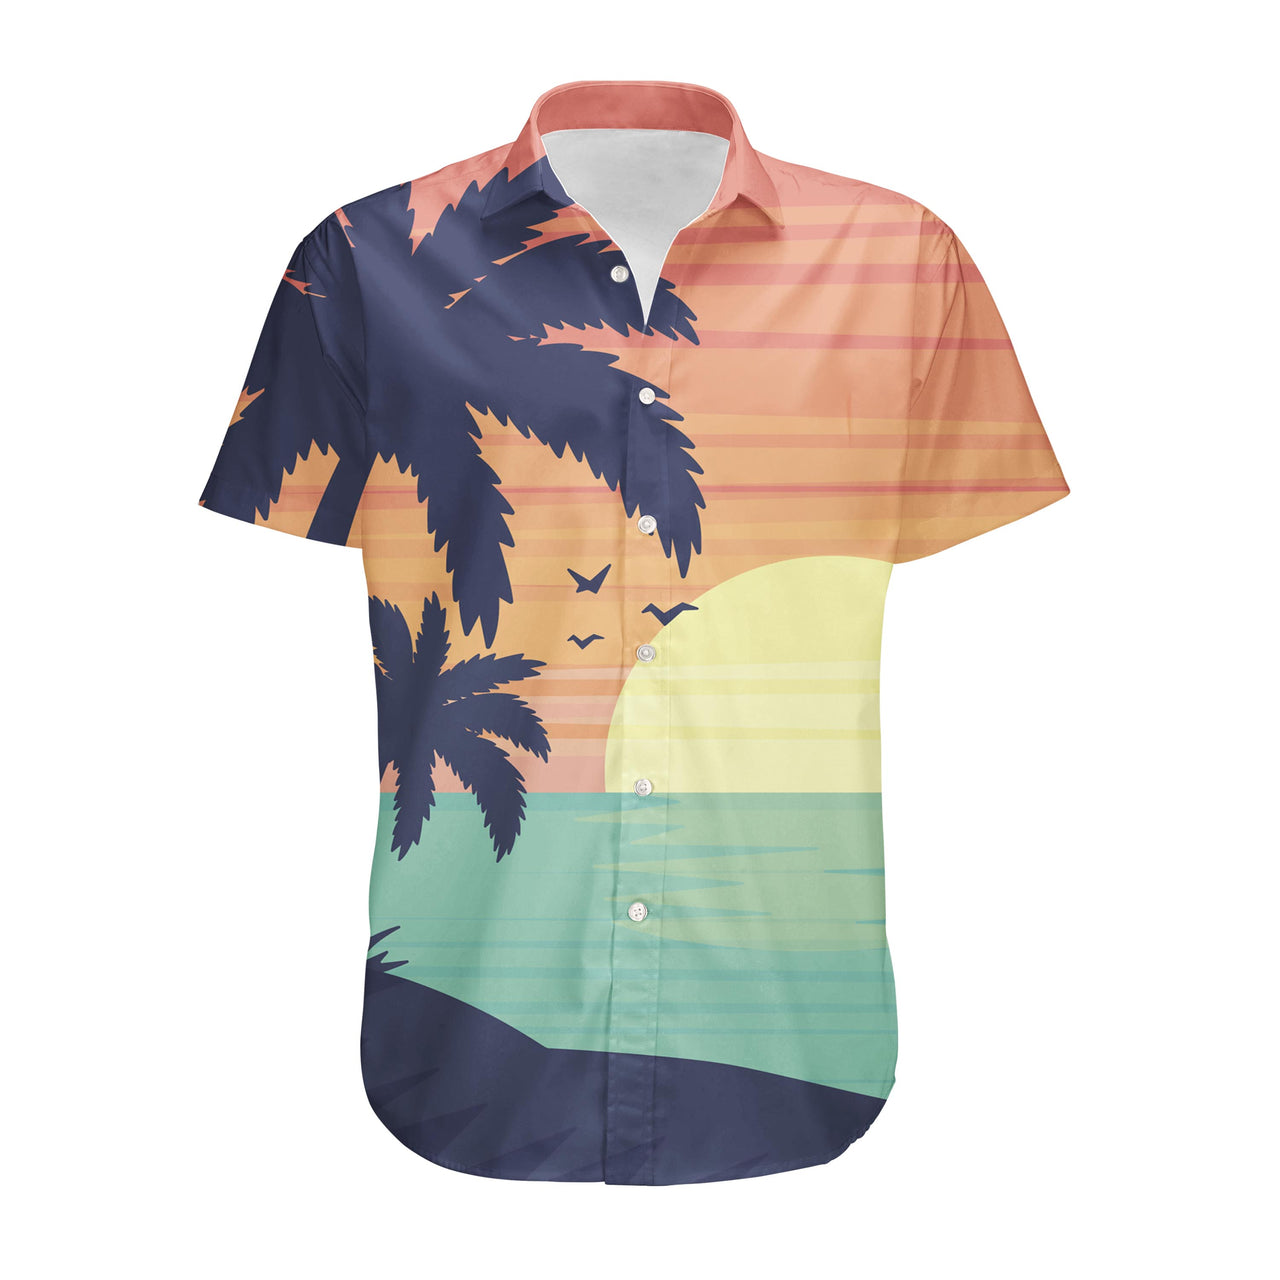 Tropical Summer Theme Designed 3D Shirts